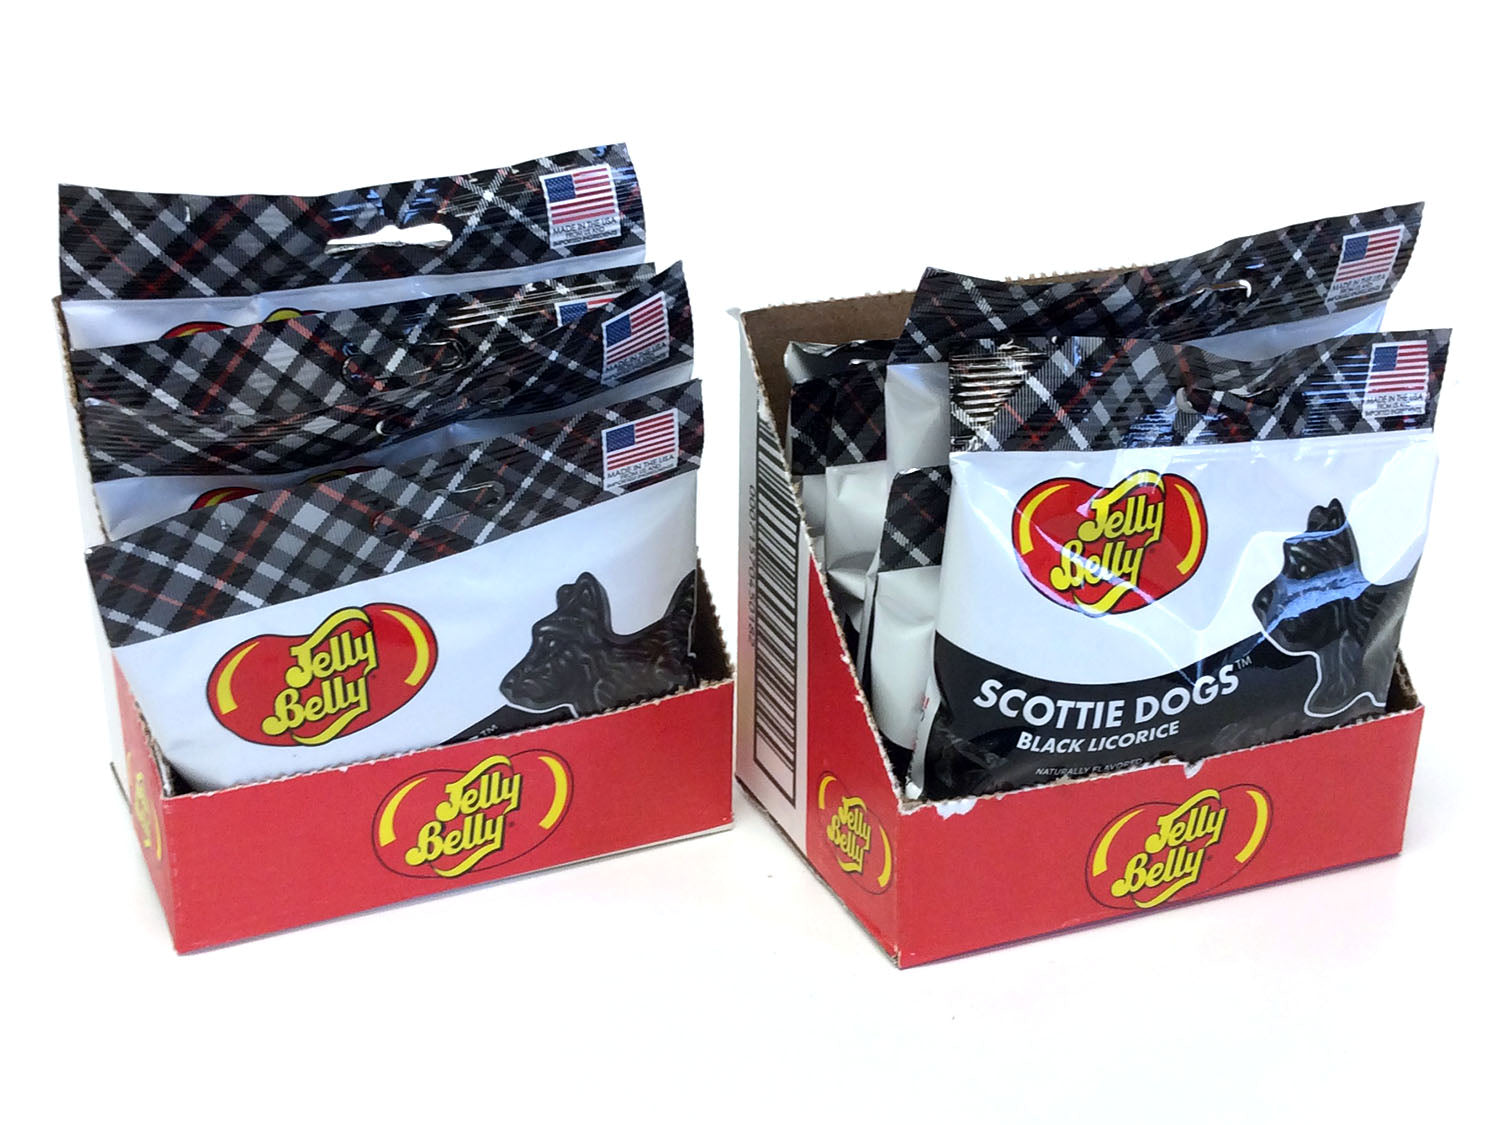 Scottie Dogs - Black Licorice - 2.75 oz bag